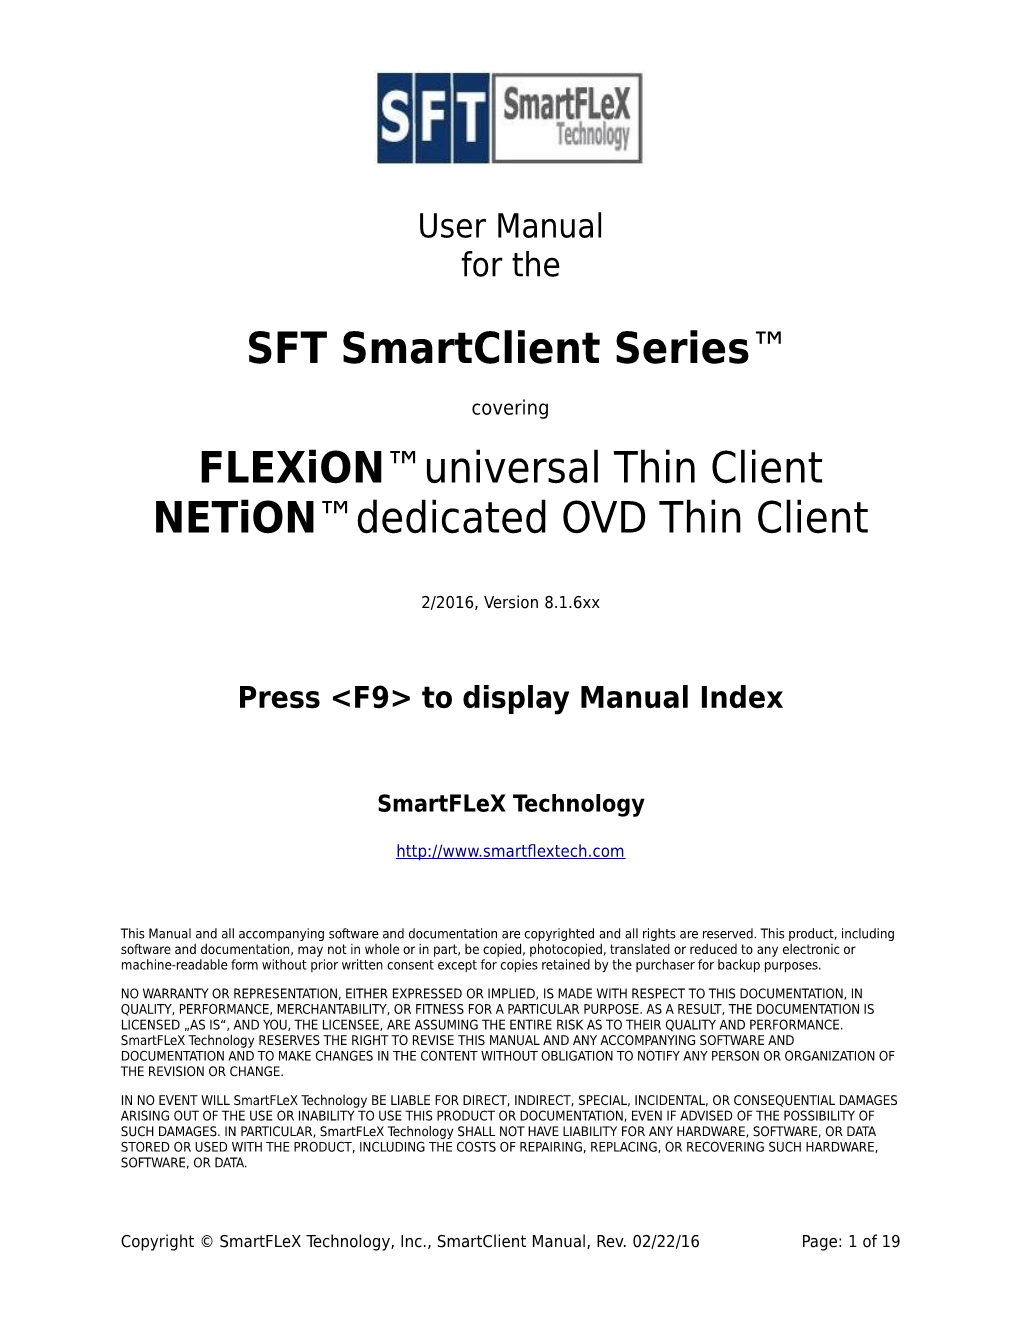 SFT Smartclient Series™ Flexion™Universal Thin Client Netion